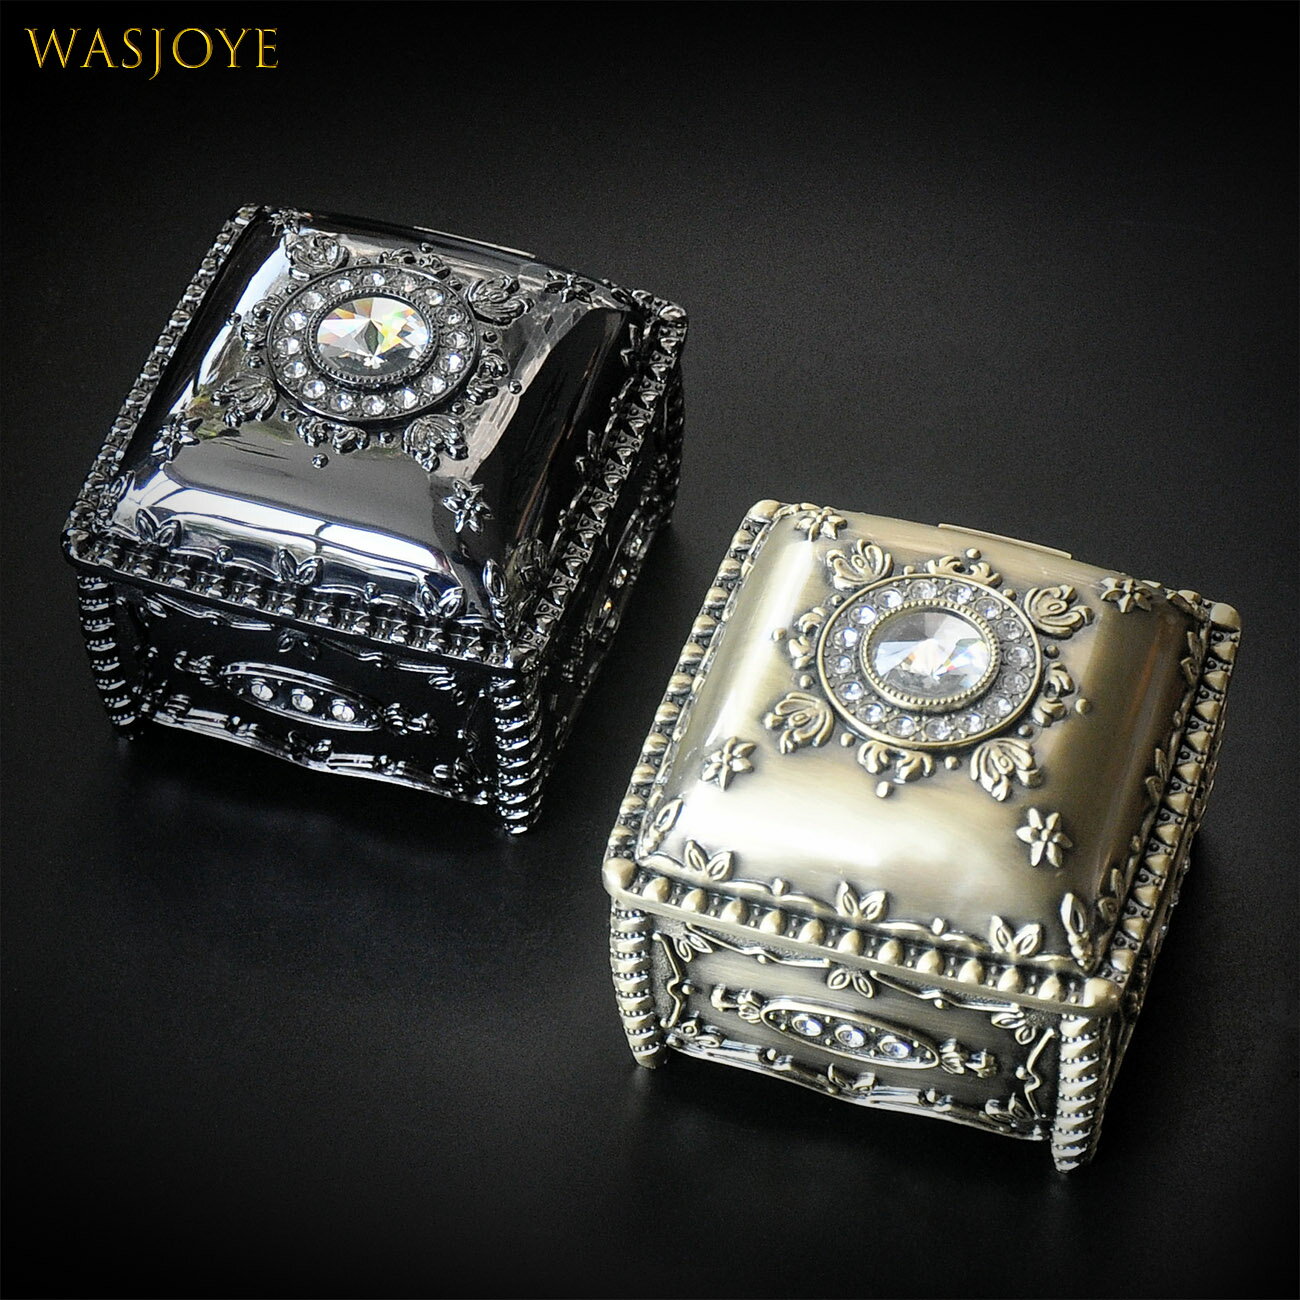 Wasjoye芙蕾雅復古歐式韓國公主首飾盒飾品收納盒珠寶項鏈戒指盒